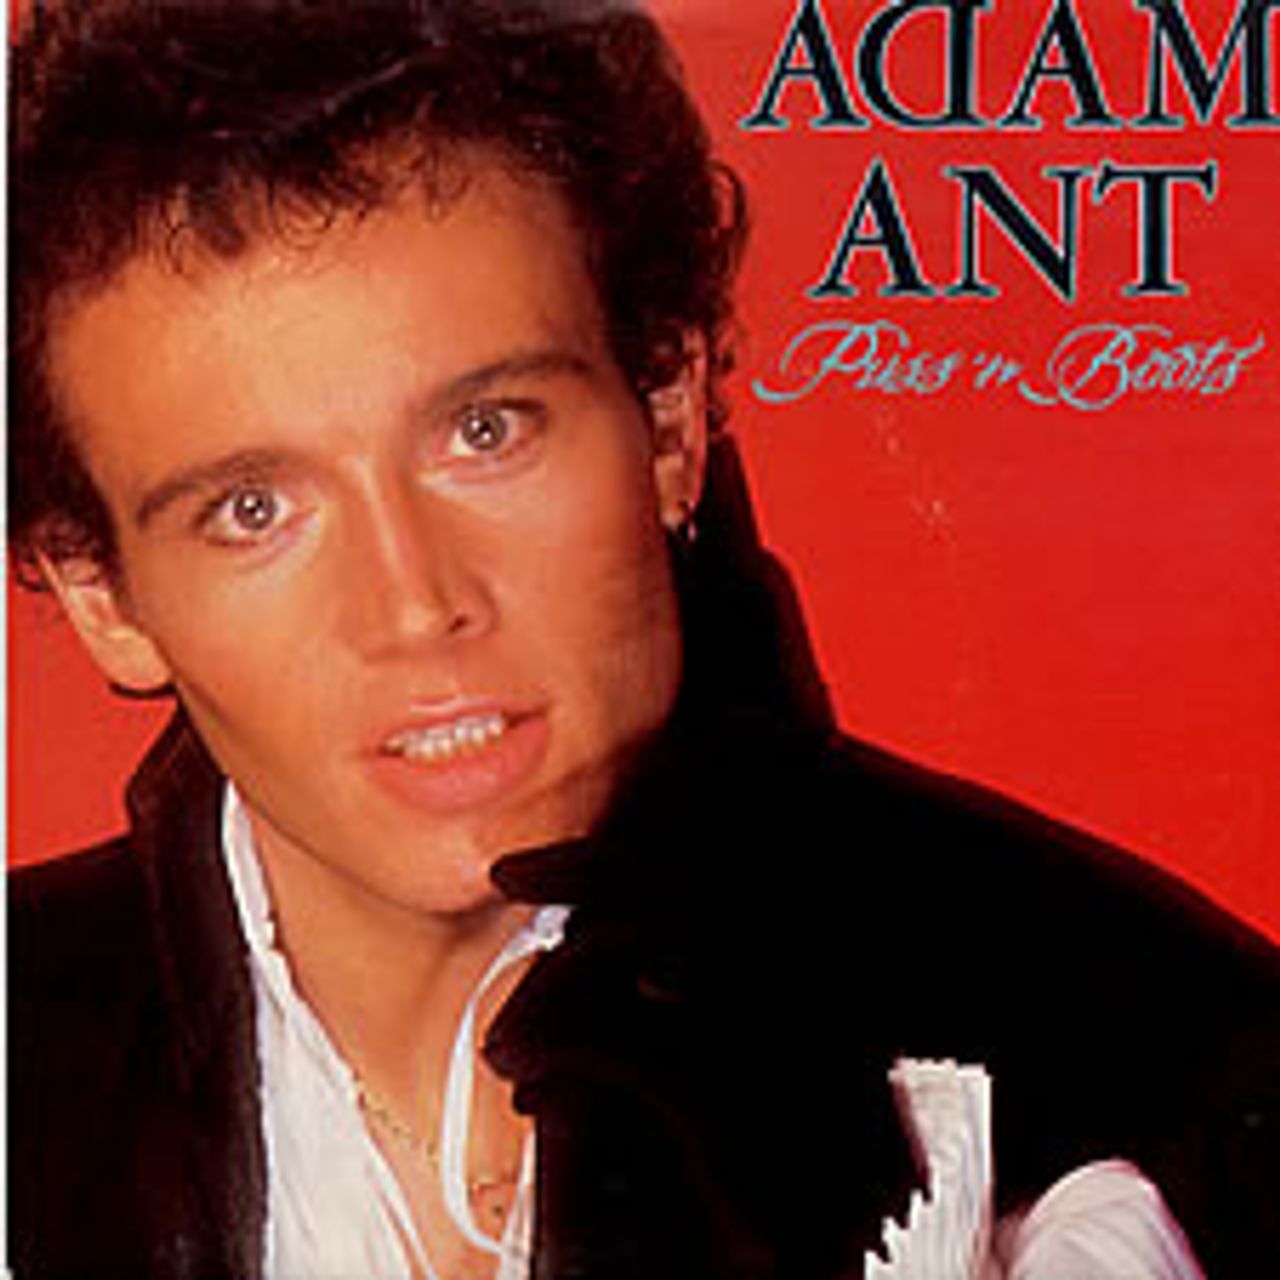 adam-ant-puss-n-boots-uk-7-inch-vinyl-single-a3614-127343.jpg